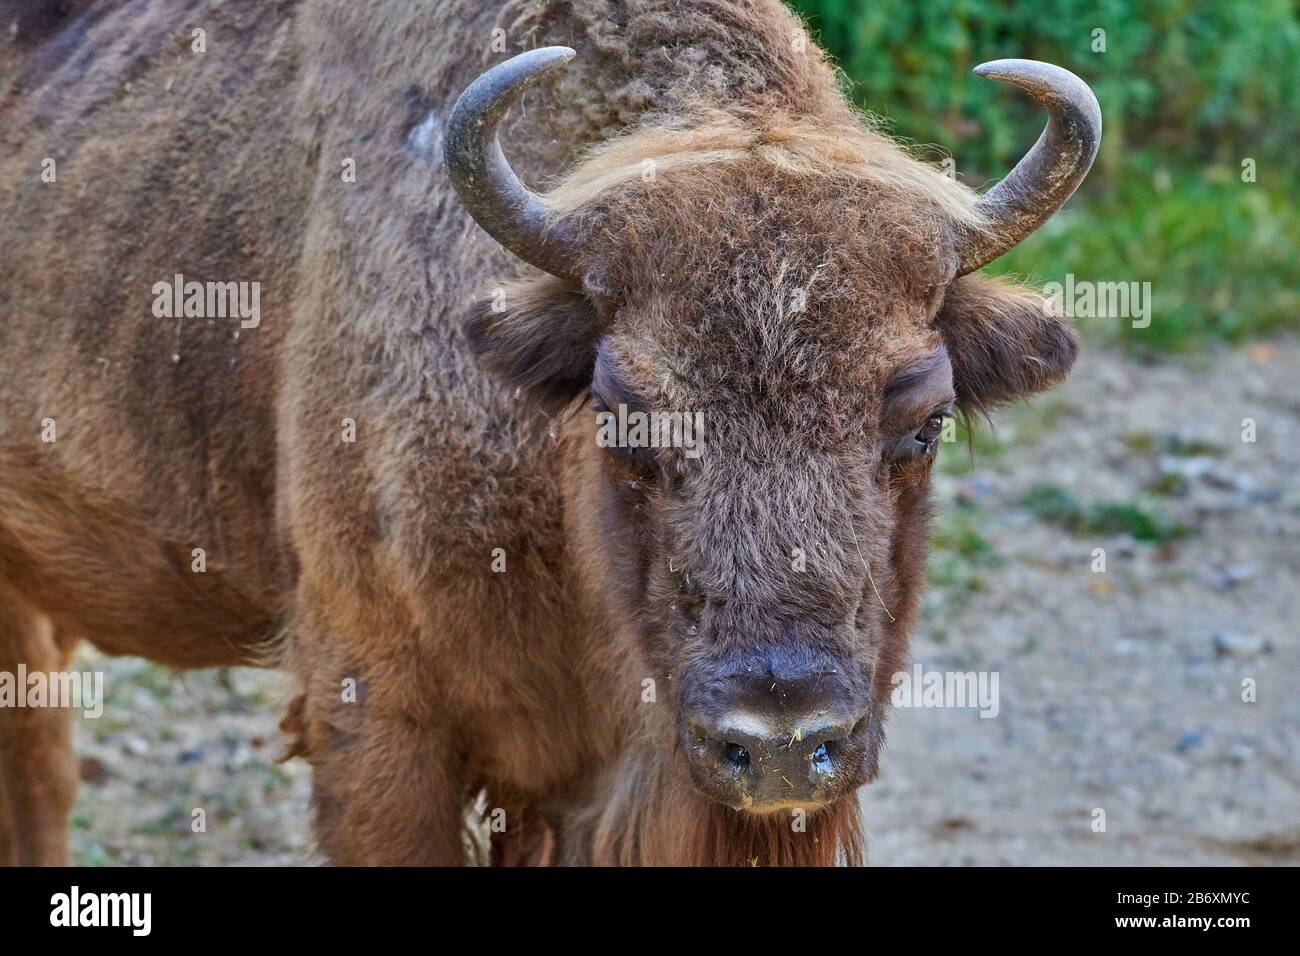 Bisonte europeo, wisent, bisonte europeo del legno, erbivoro Foto Stock